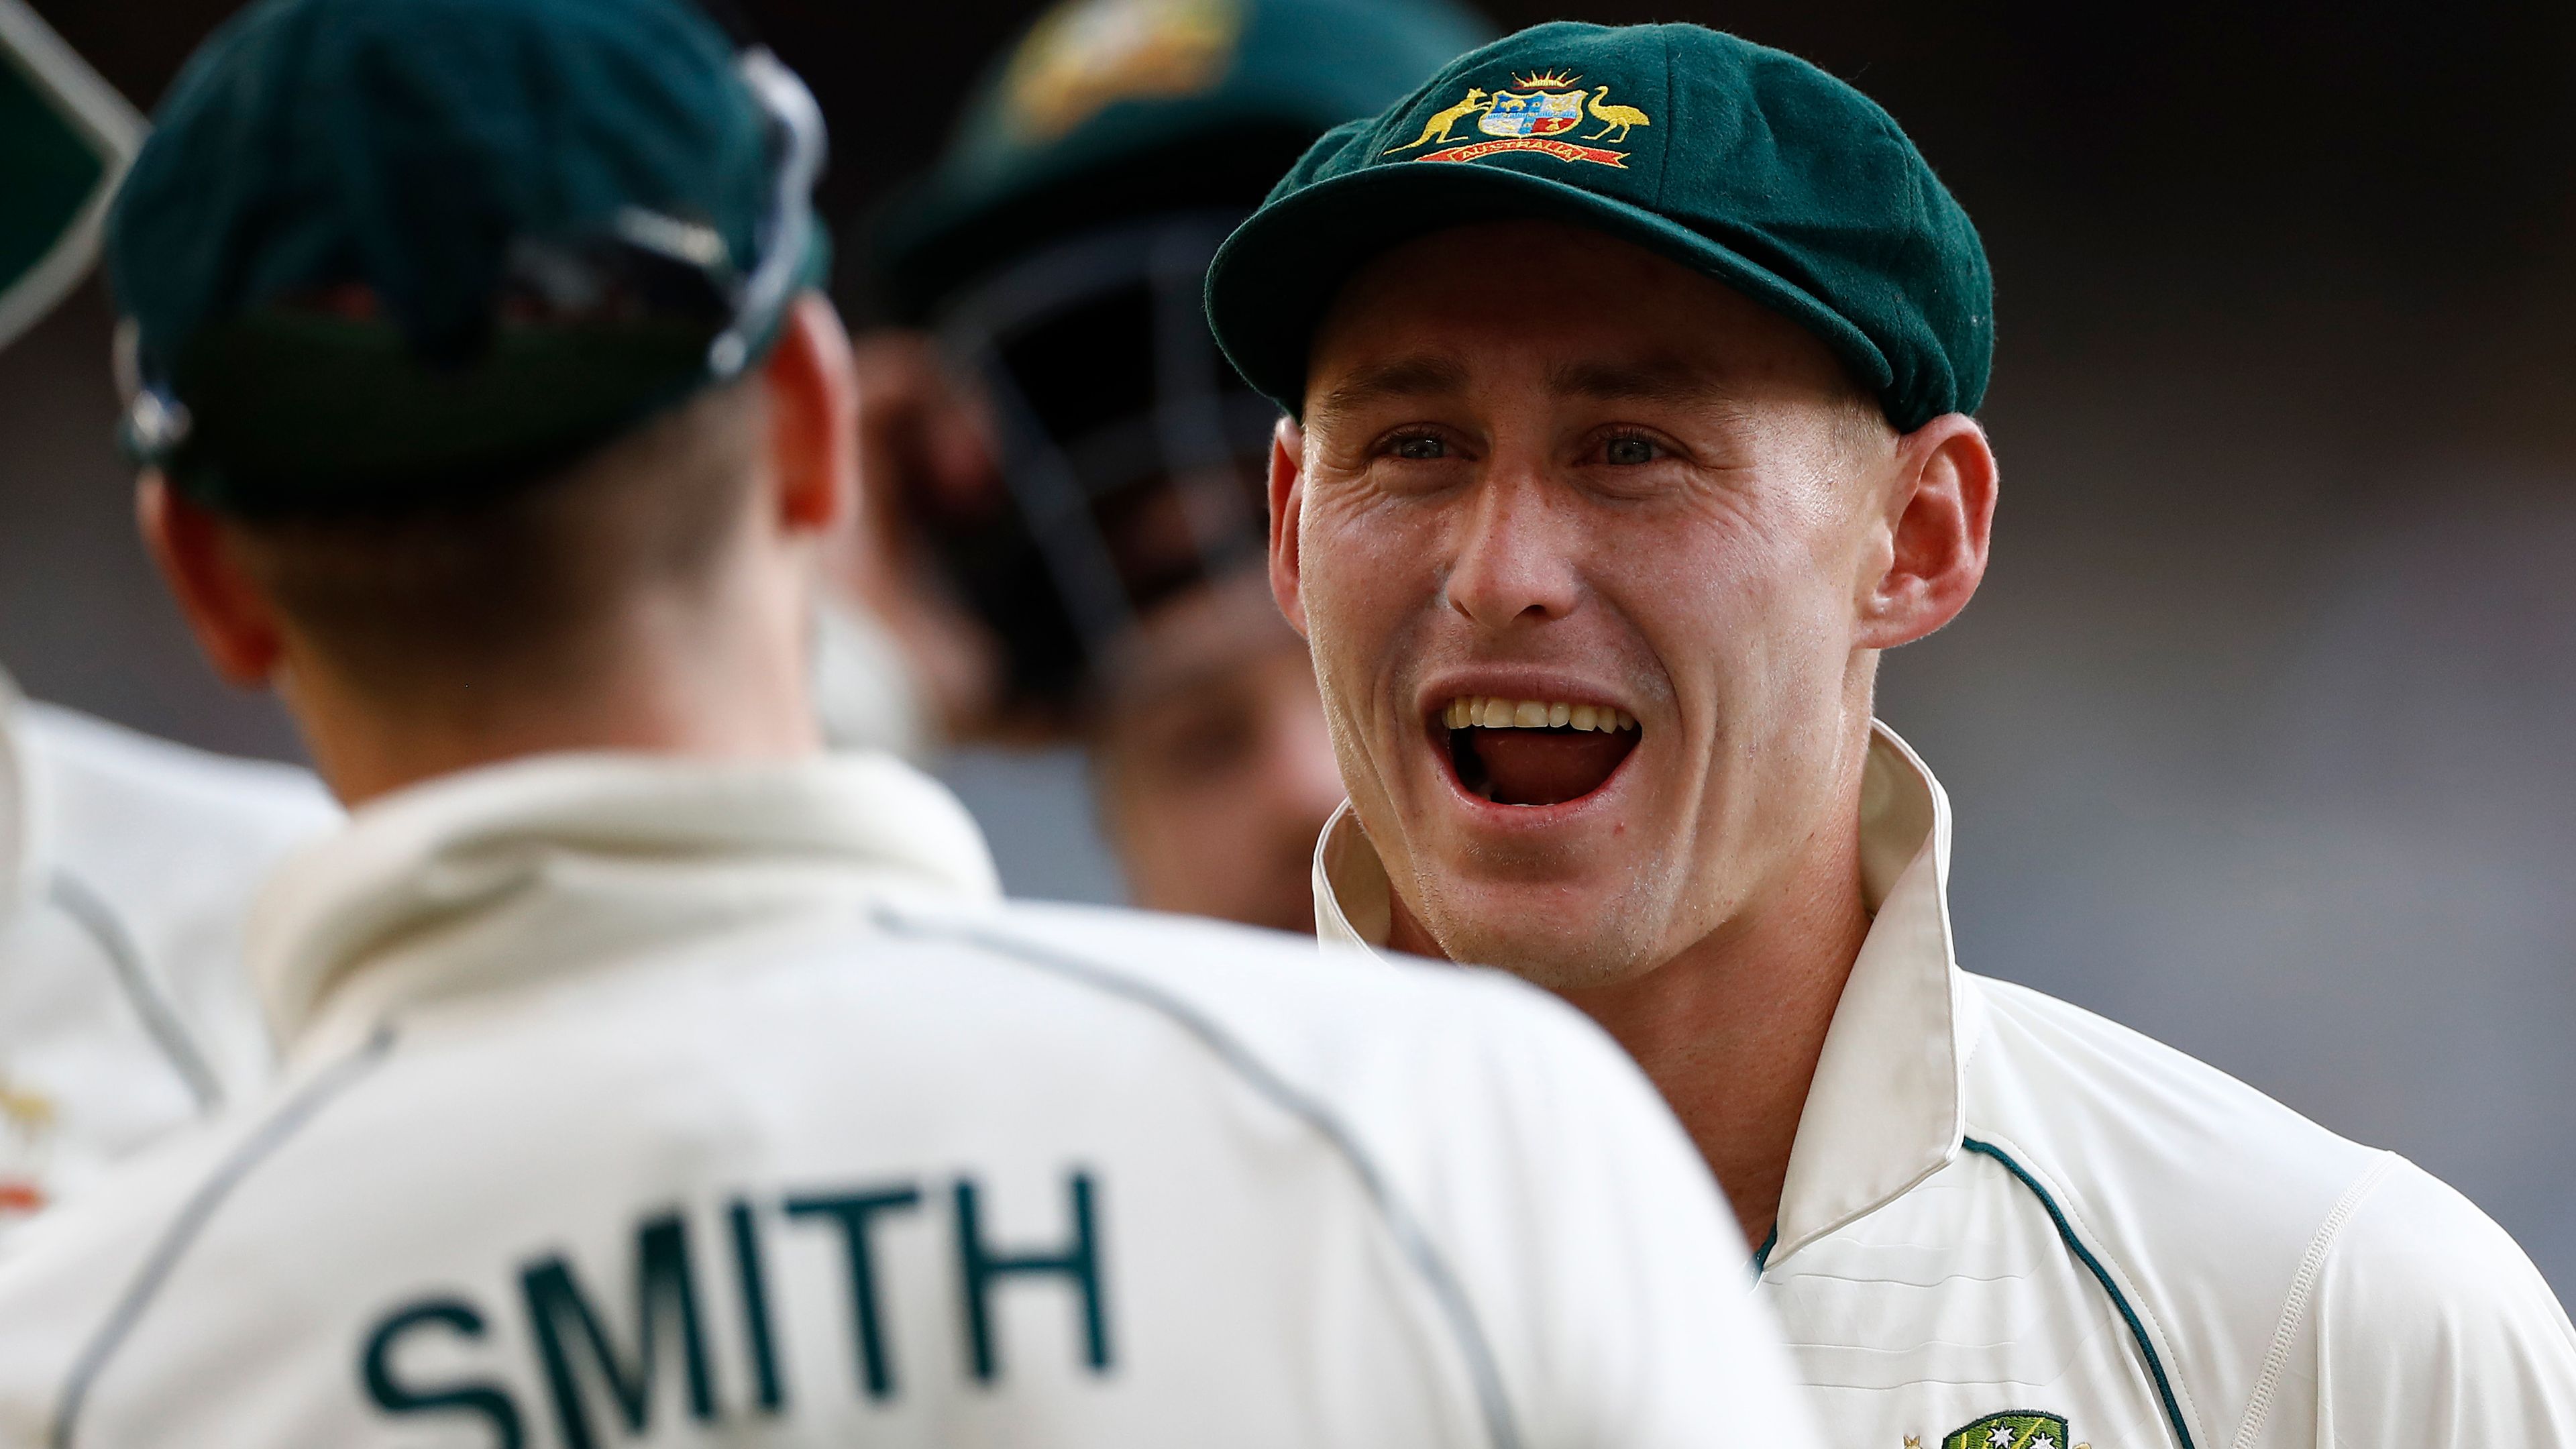 Aussie batter Marnus Labuschagne causes a stir after winning cricket honour